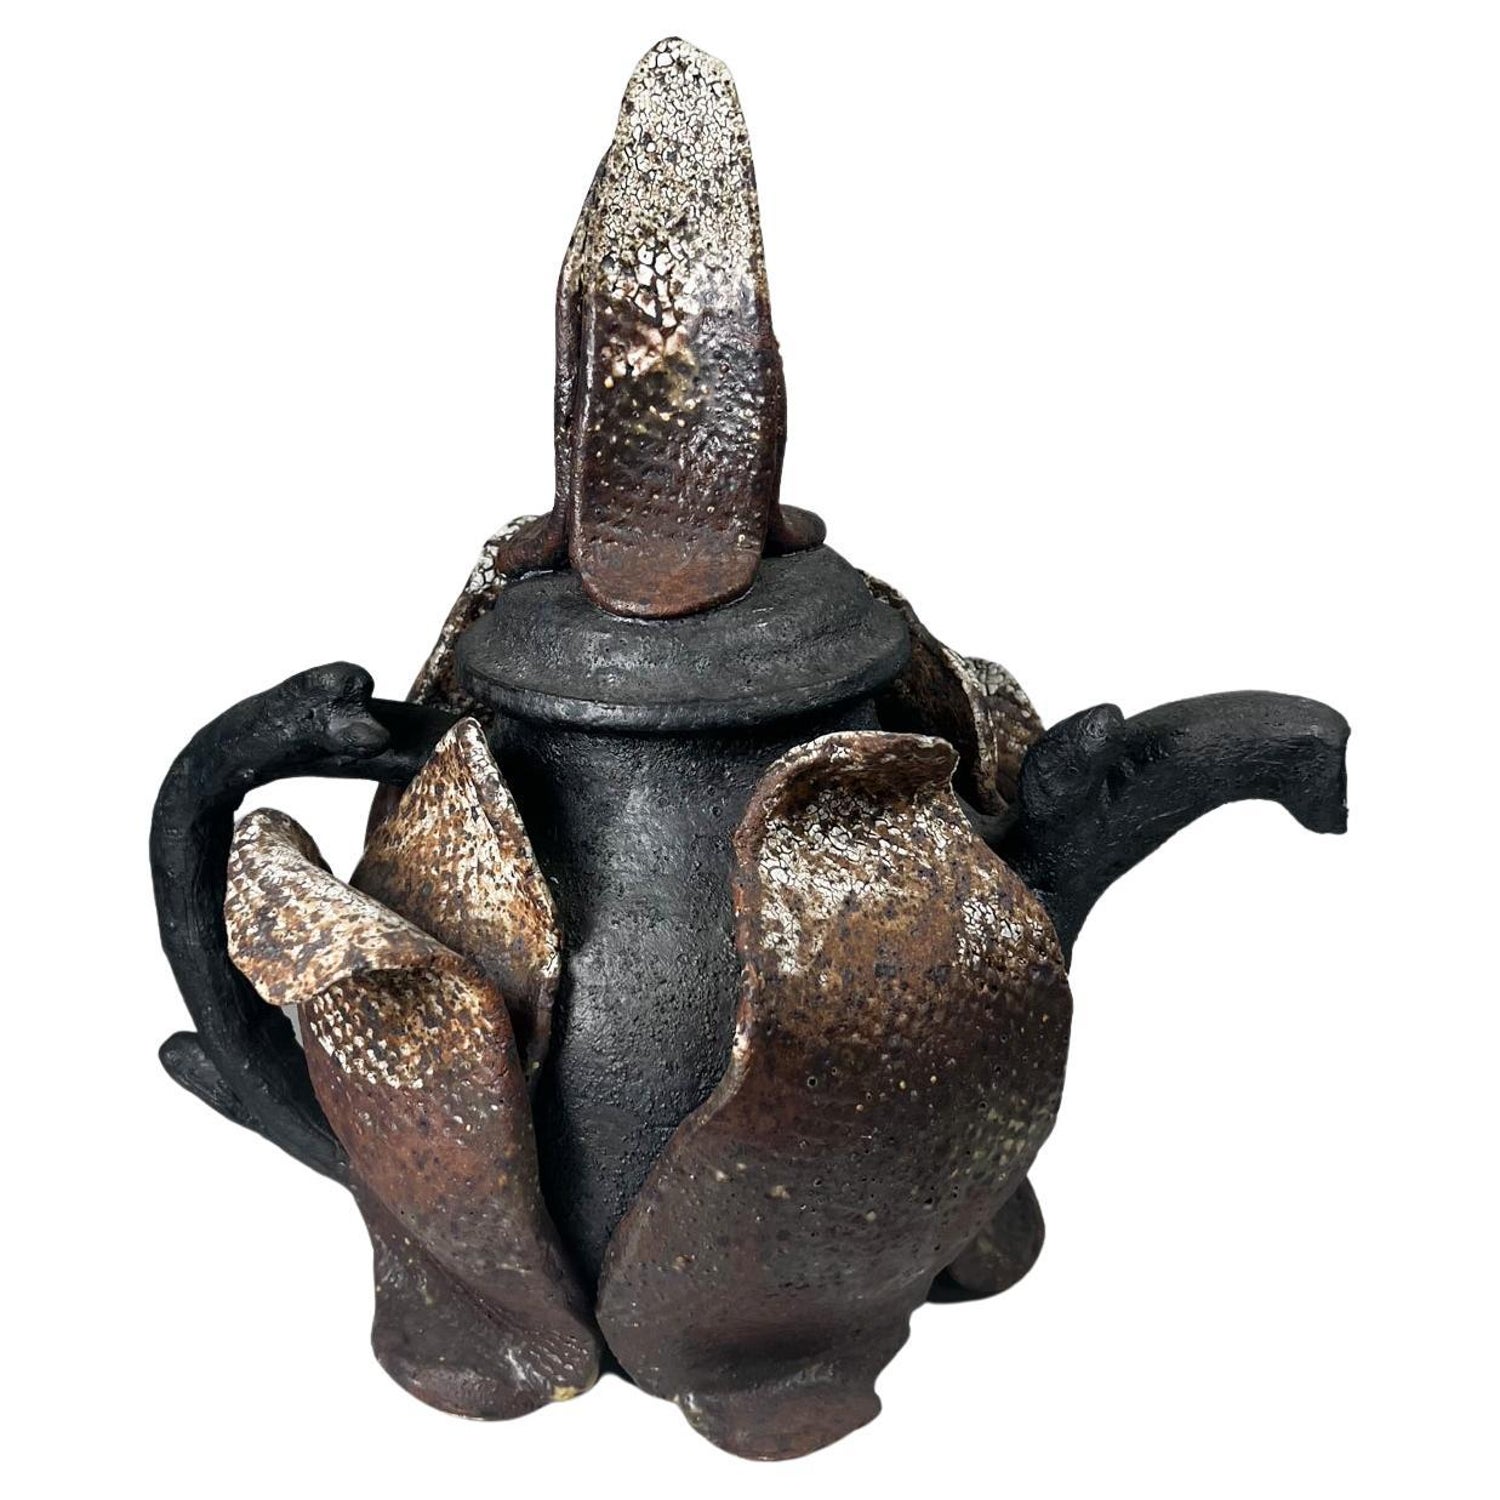 Vintage Sculptural Stainless-Steel Personal Tea Pot Pitcher